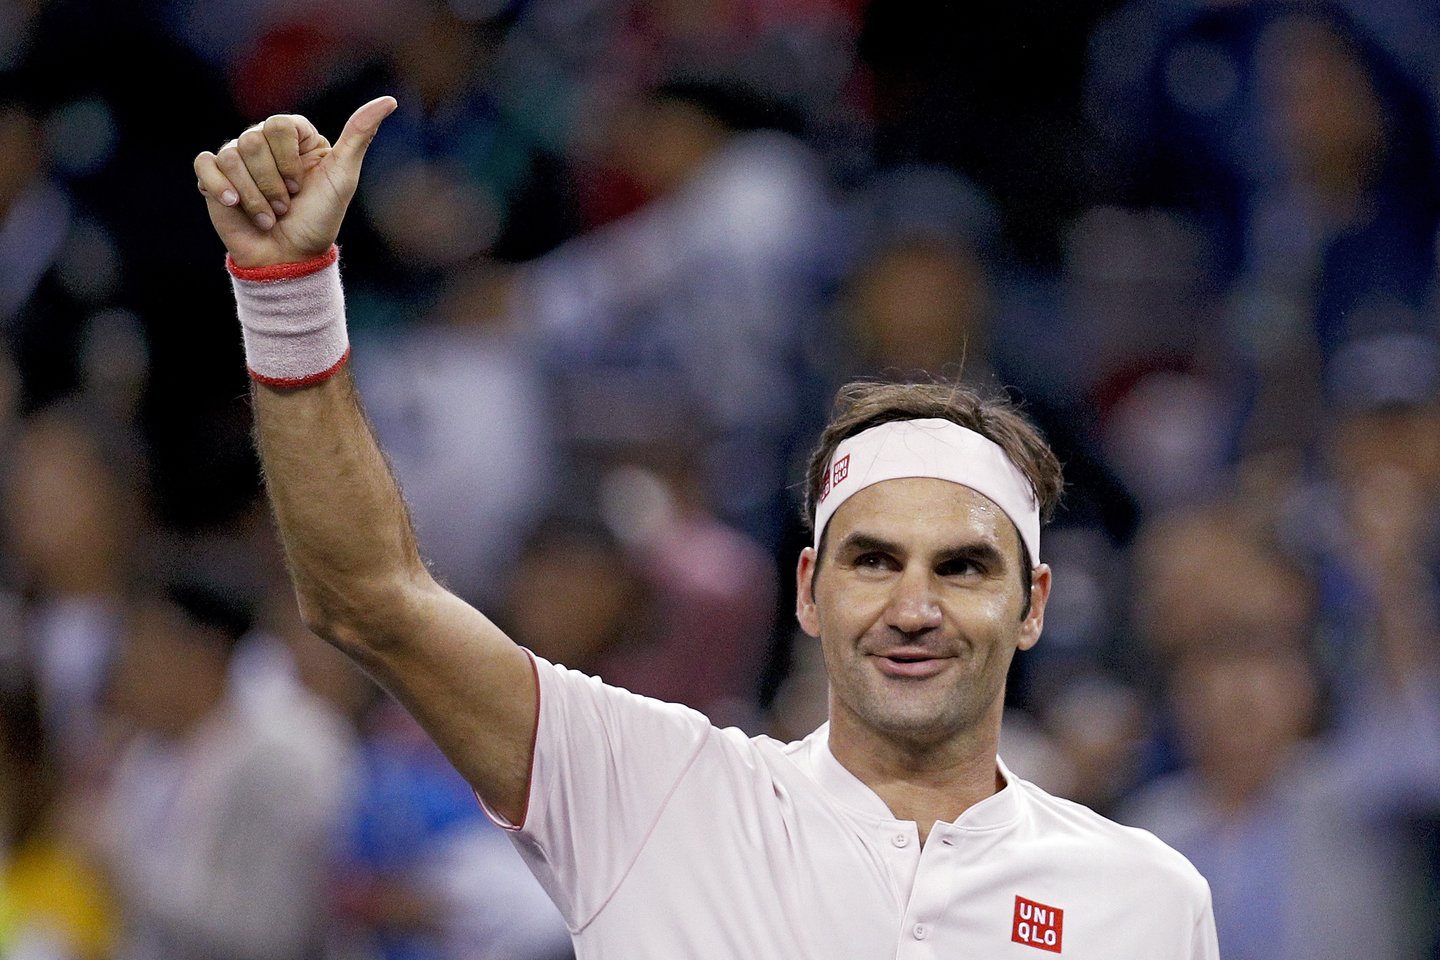  R.Federeris gina čempiono titulą.<br> AP nuotr.